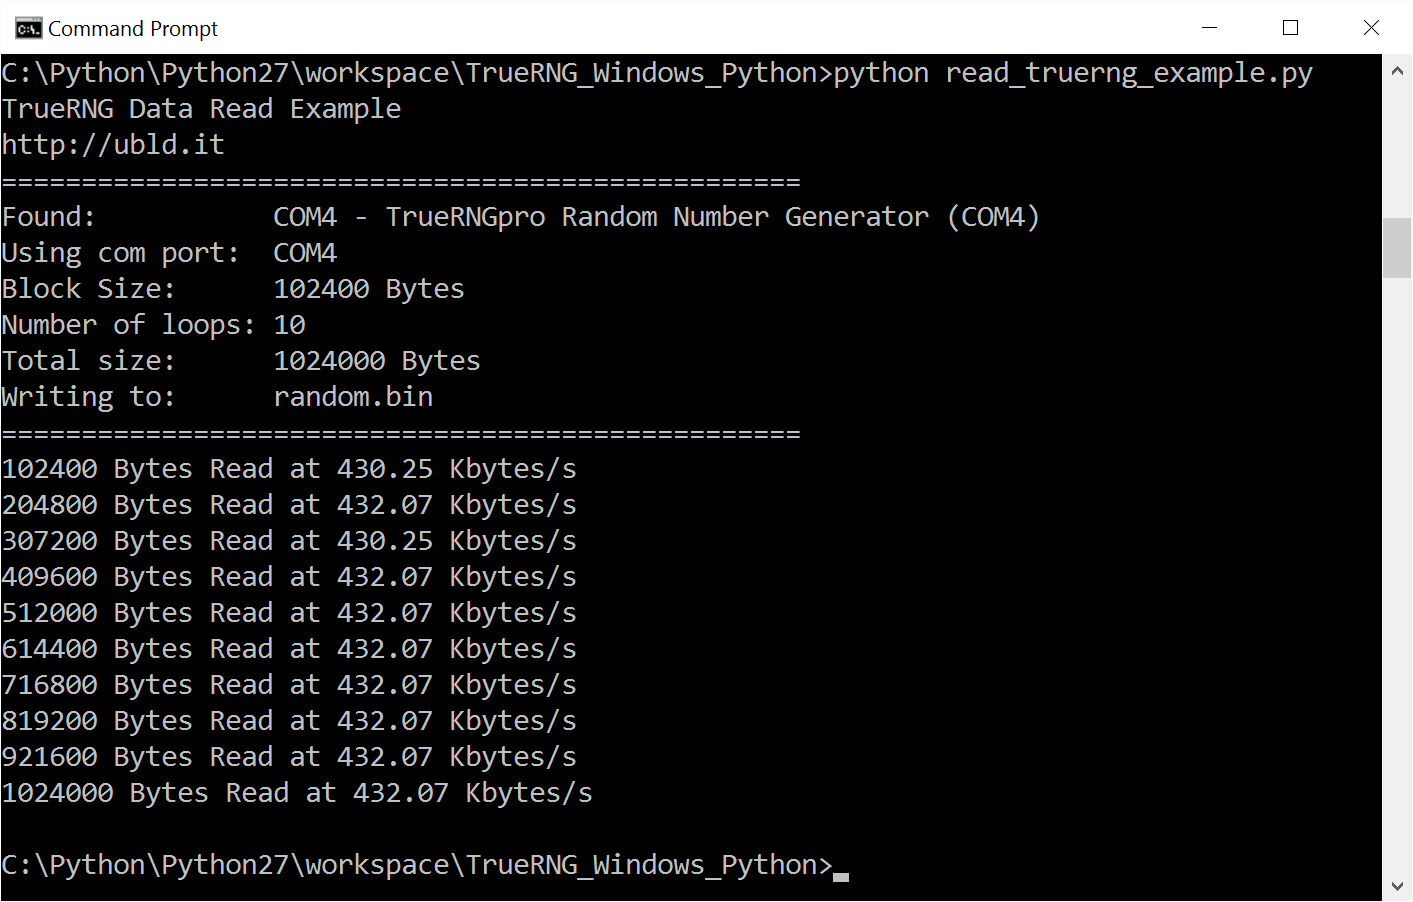 Screenshot of Windows 10 Python example running with TrueRNGpro